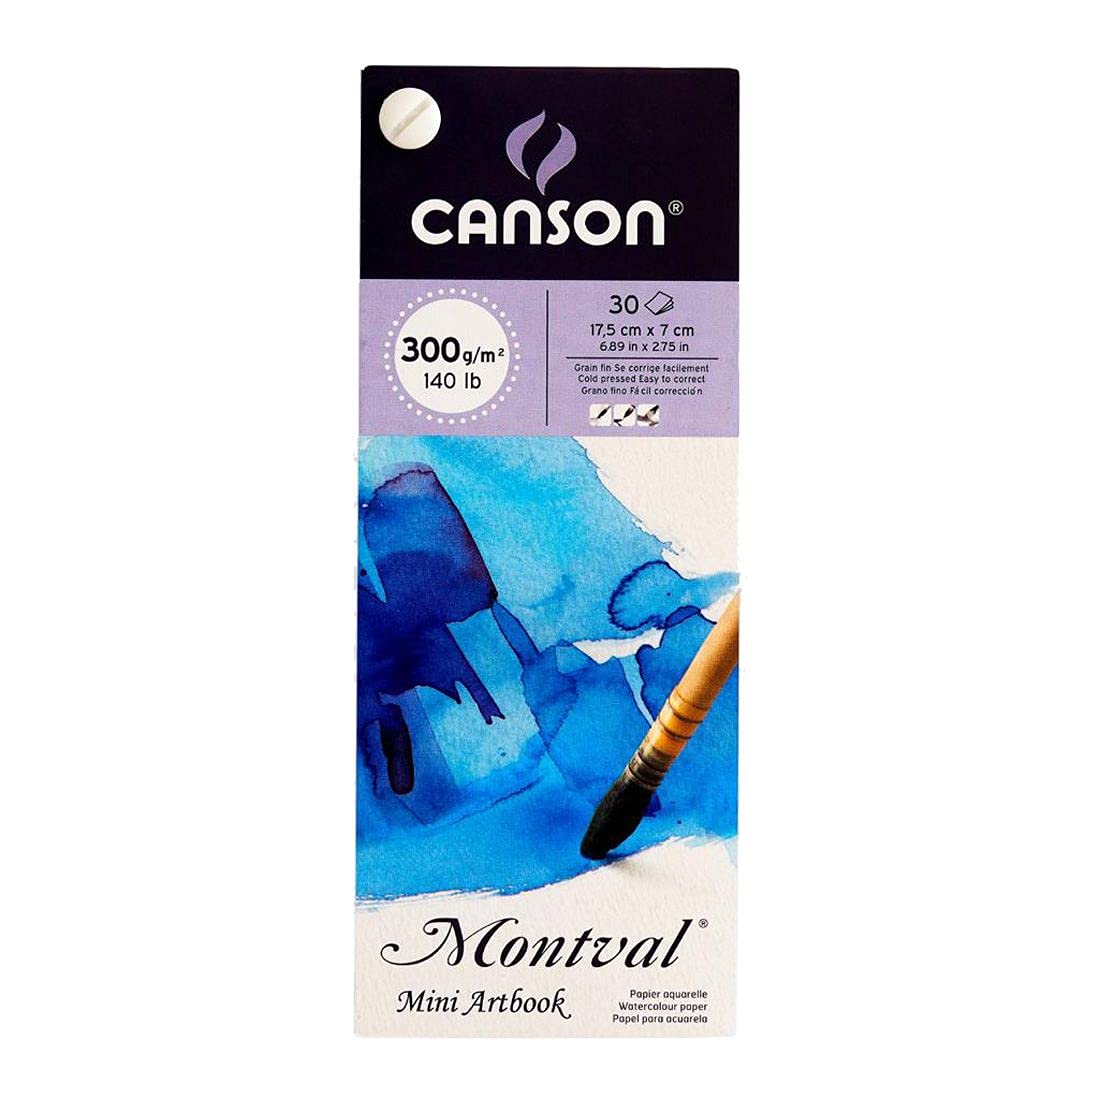 Canson Montval Watercolor 300 GSM Cold Pressed 17.5 x 7 cm Mini Art Book (White, 30 Sheets)